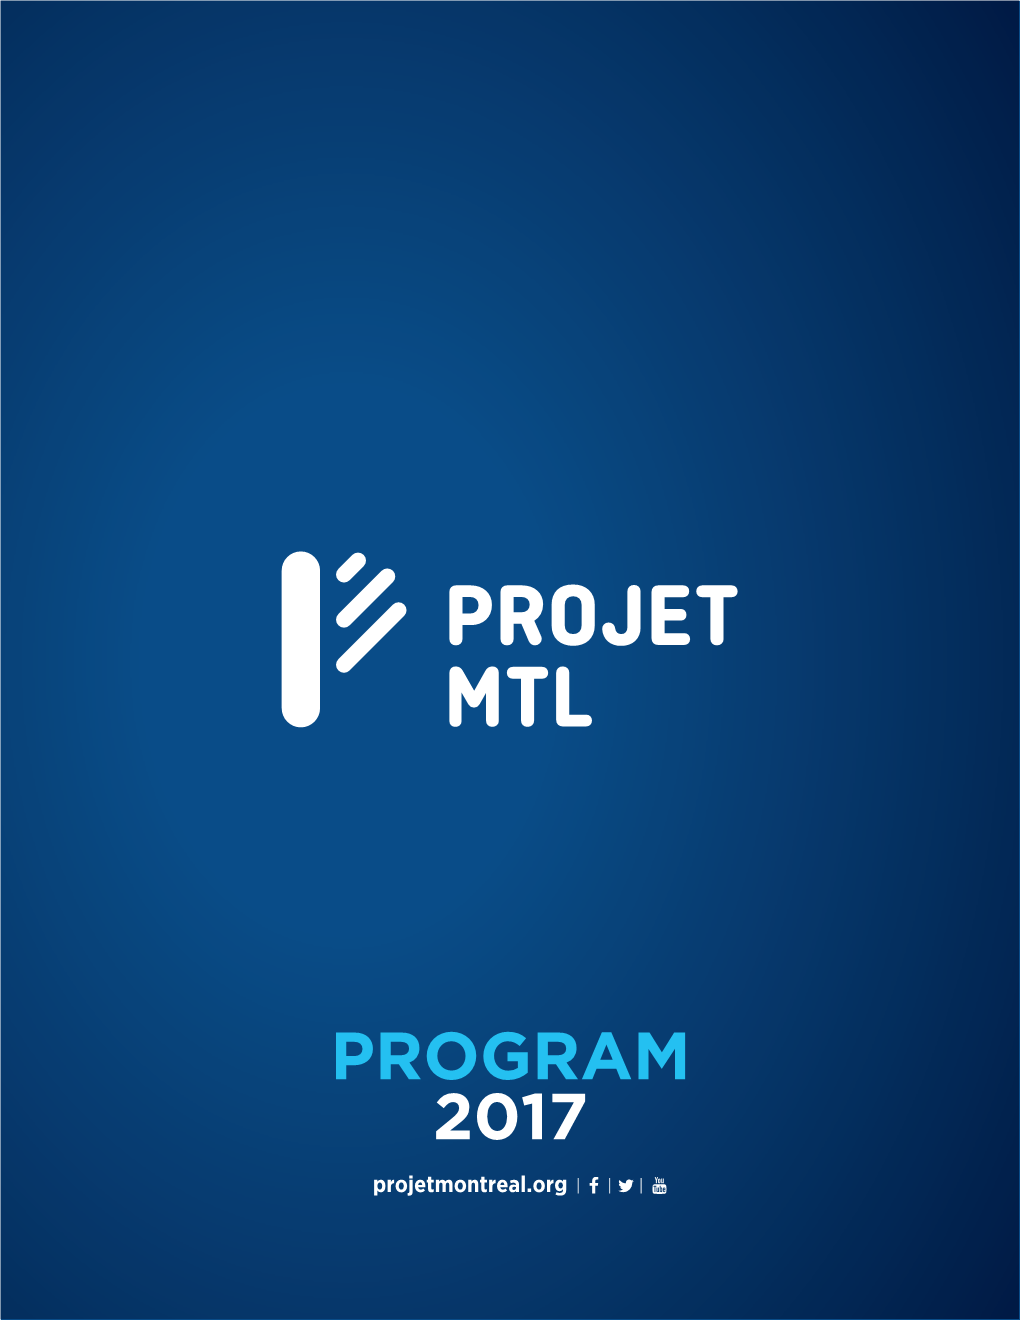 Program 2017